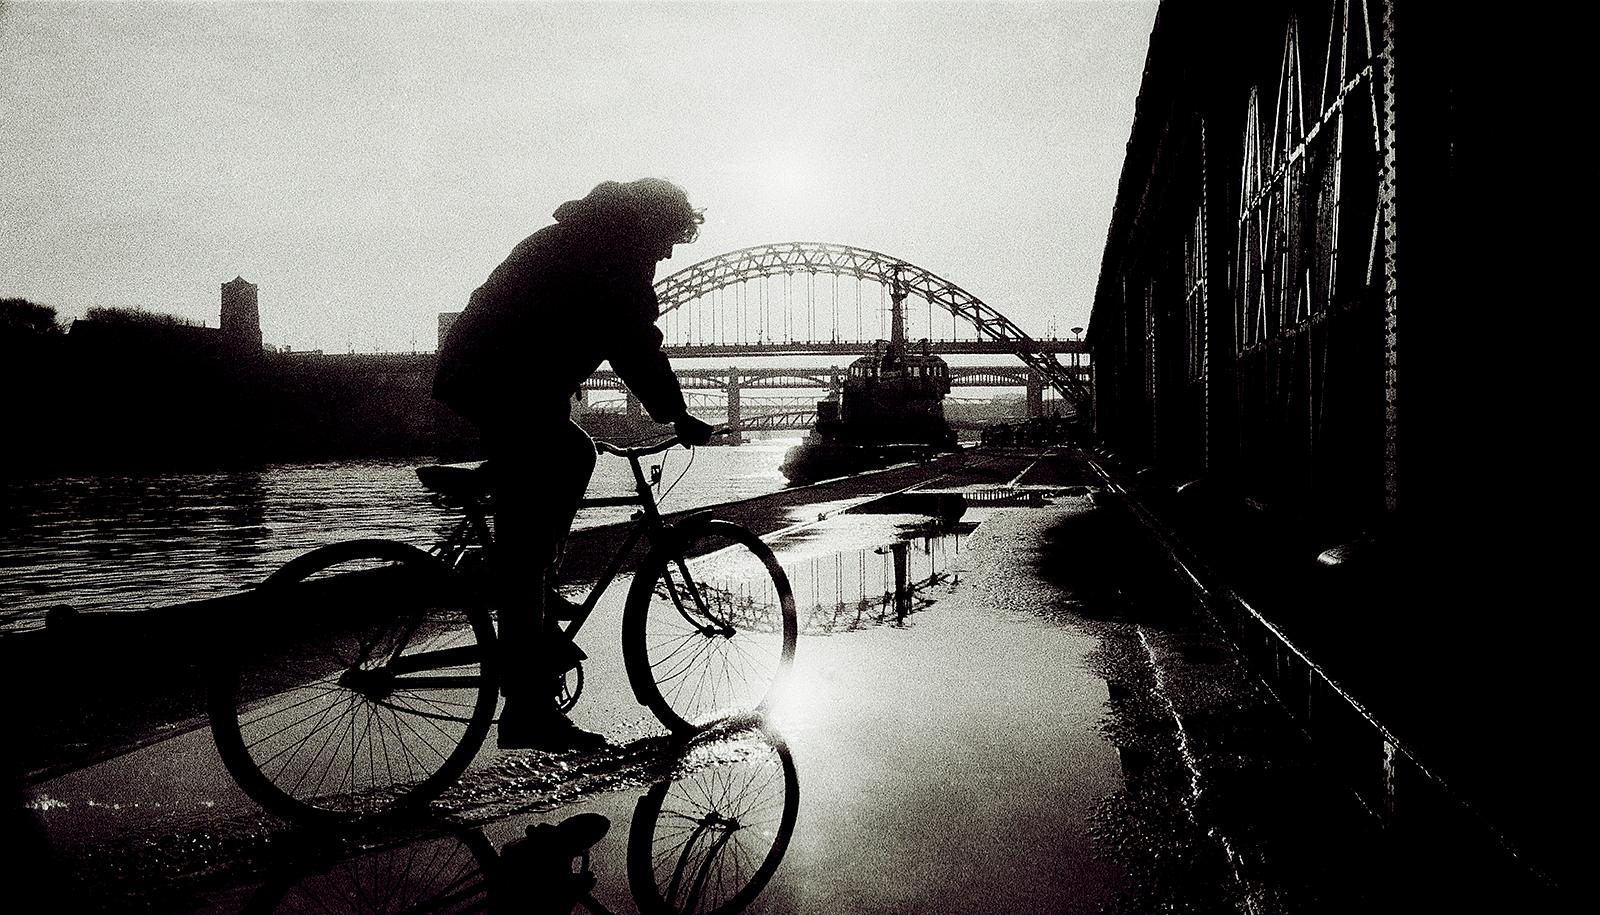 Ian Sanderson Landscape Photograph - Newcastle - Signed limited edition fine art print, black and white photo, City